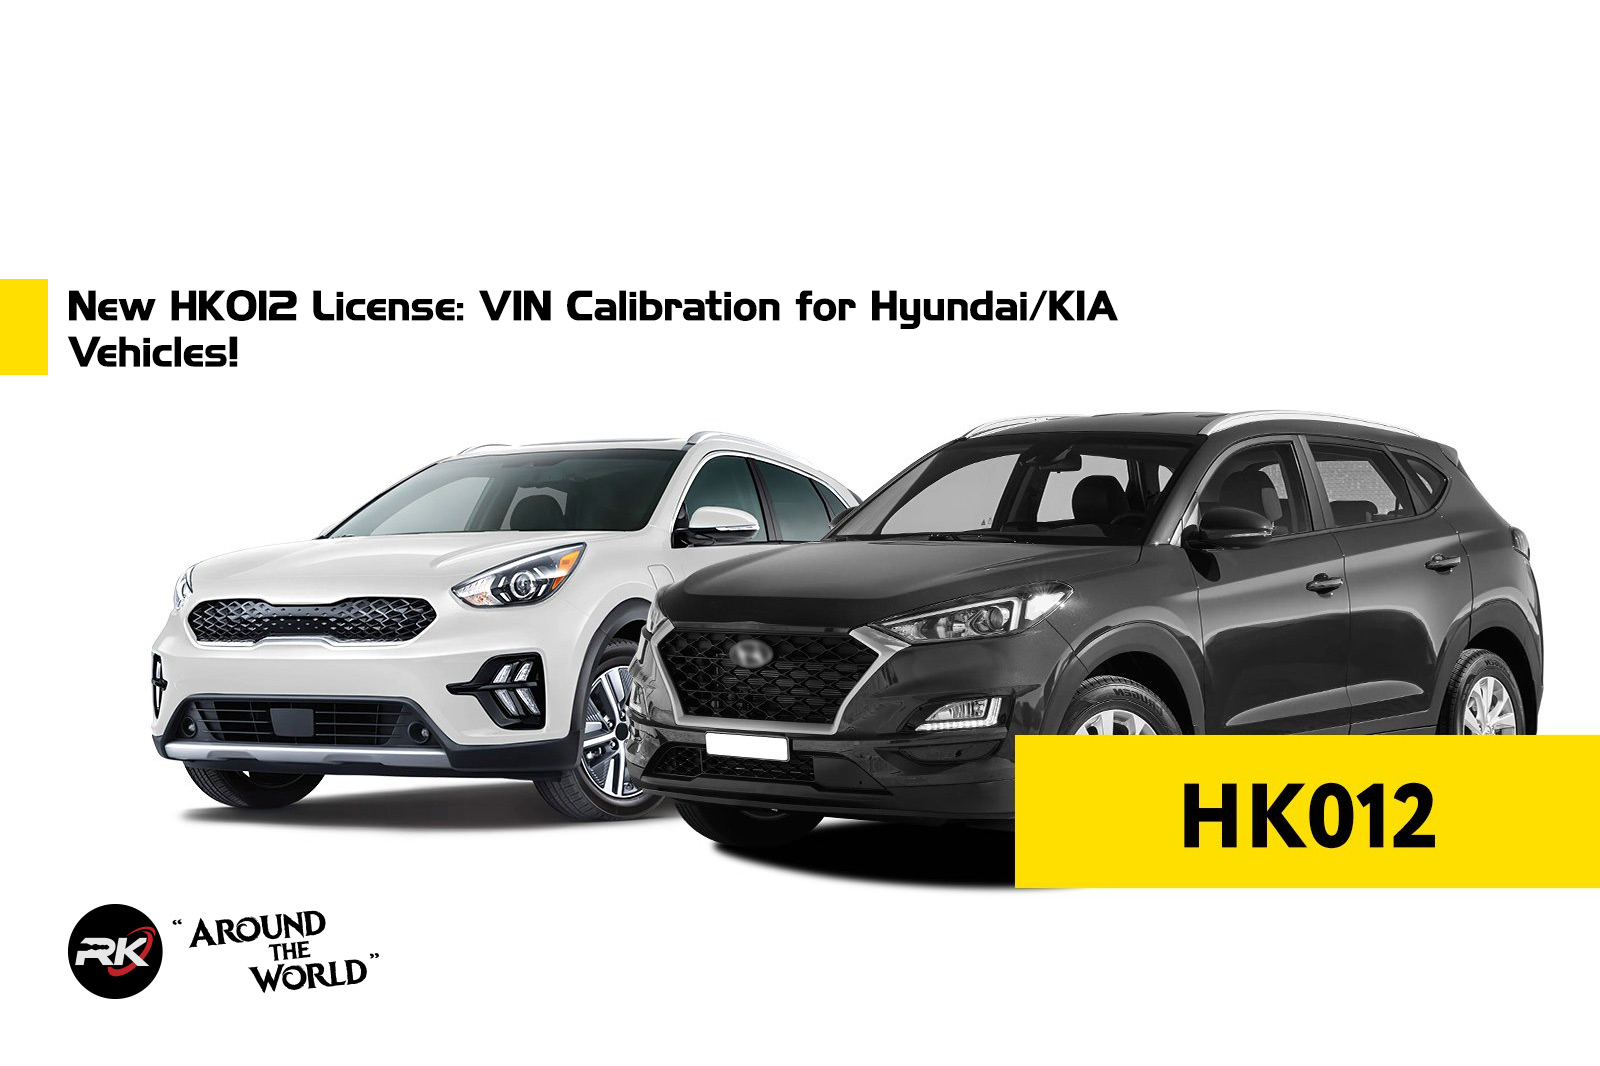 New HK012 License: VIN Calibration for Hyundai/KIA Vehicles!